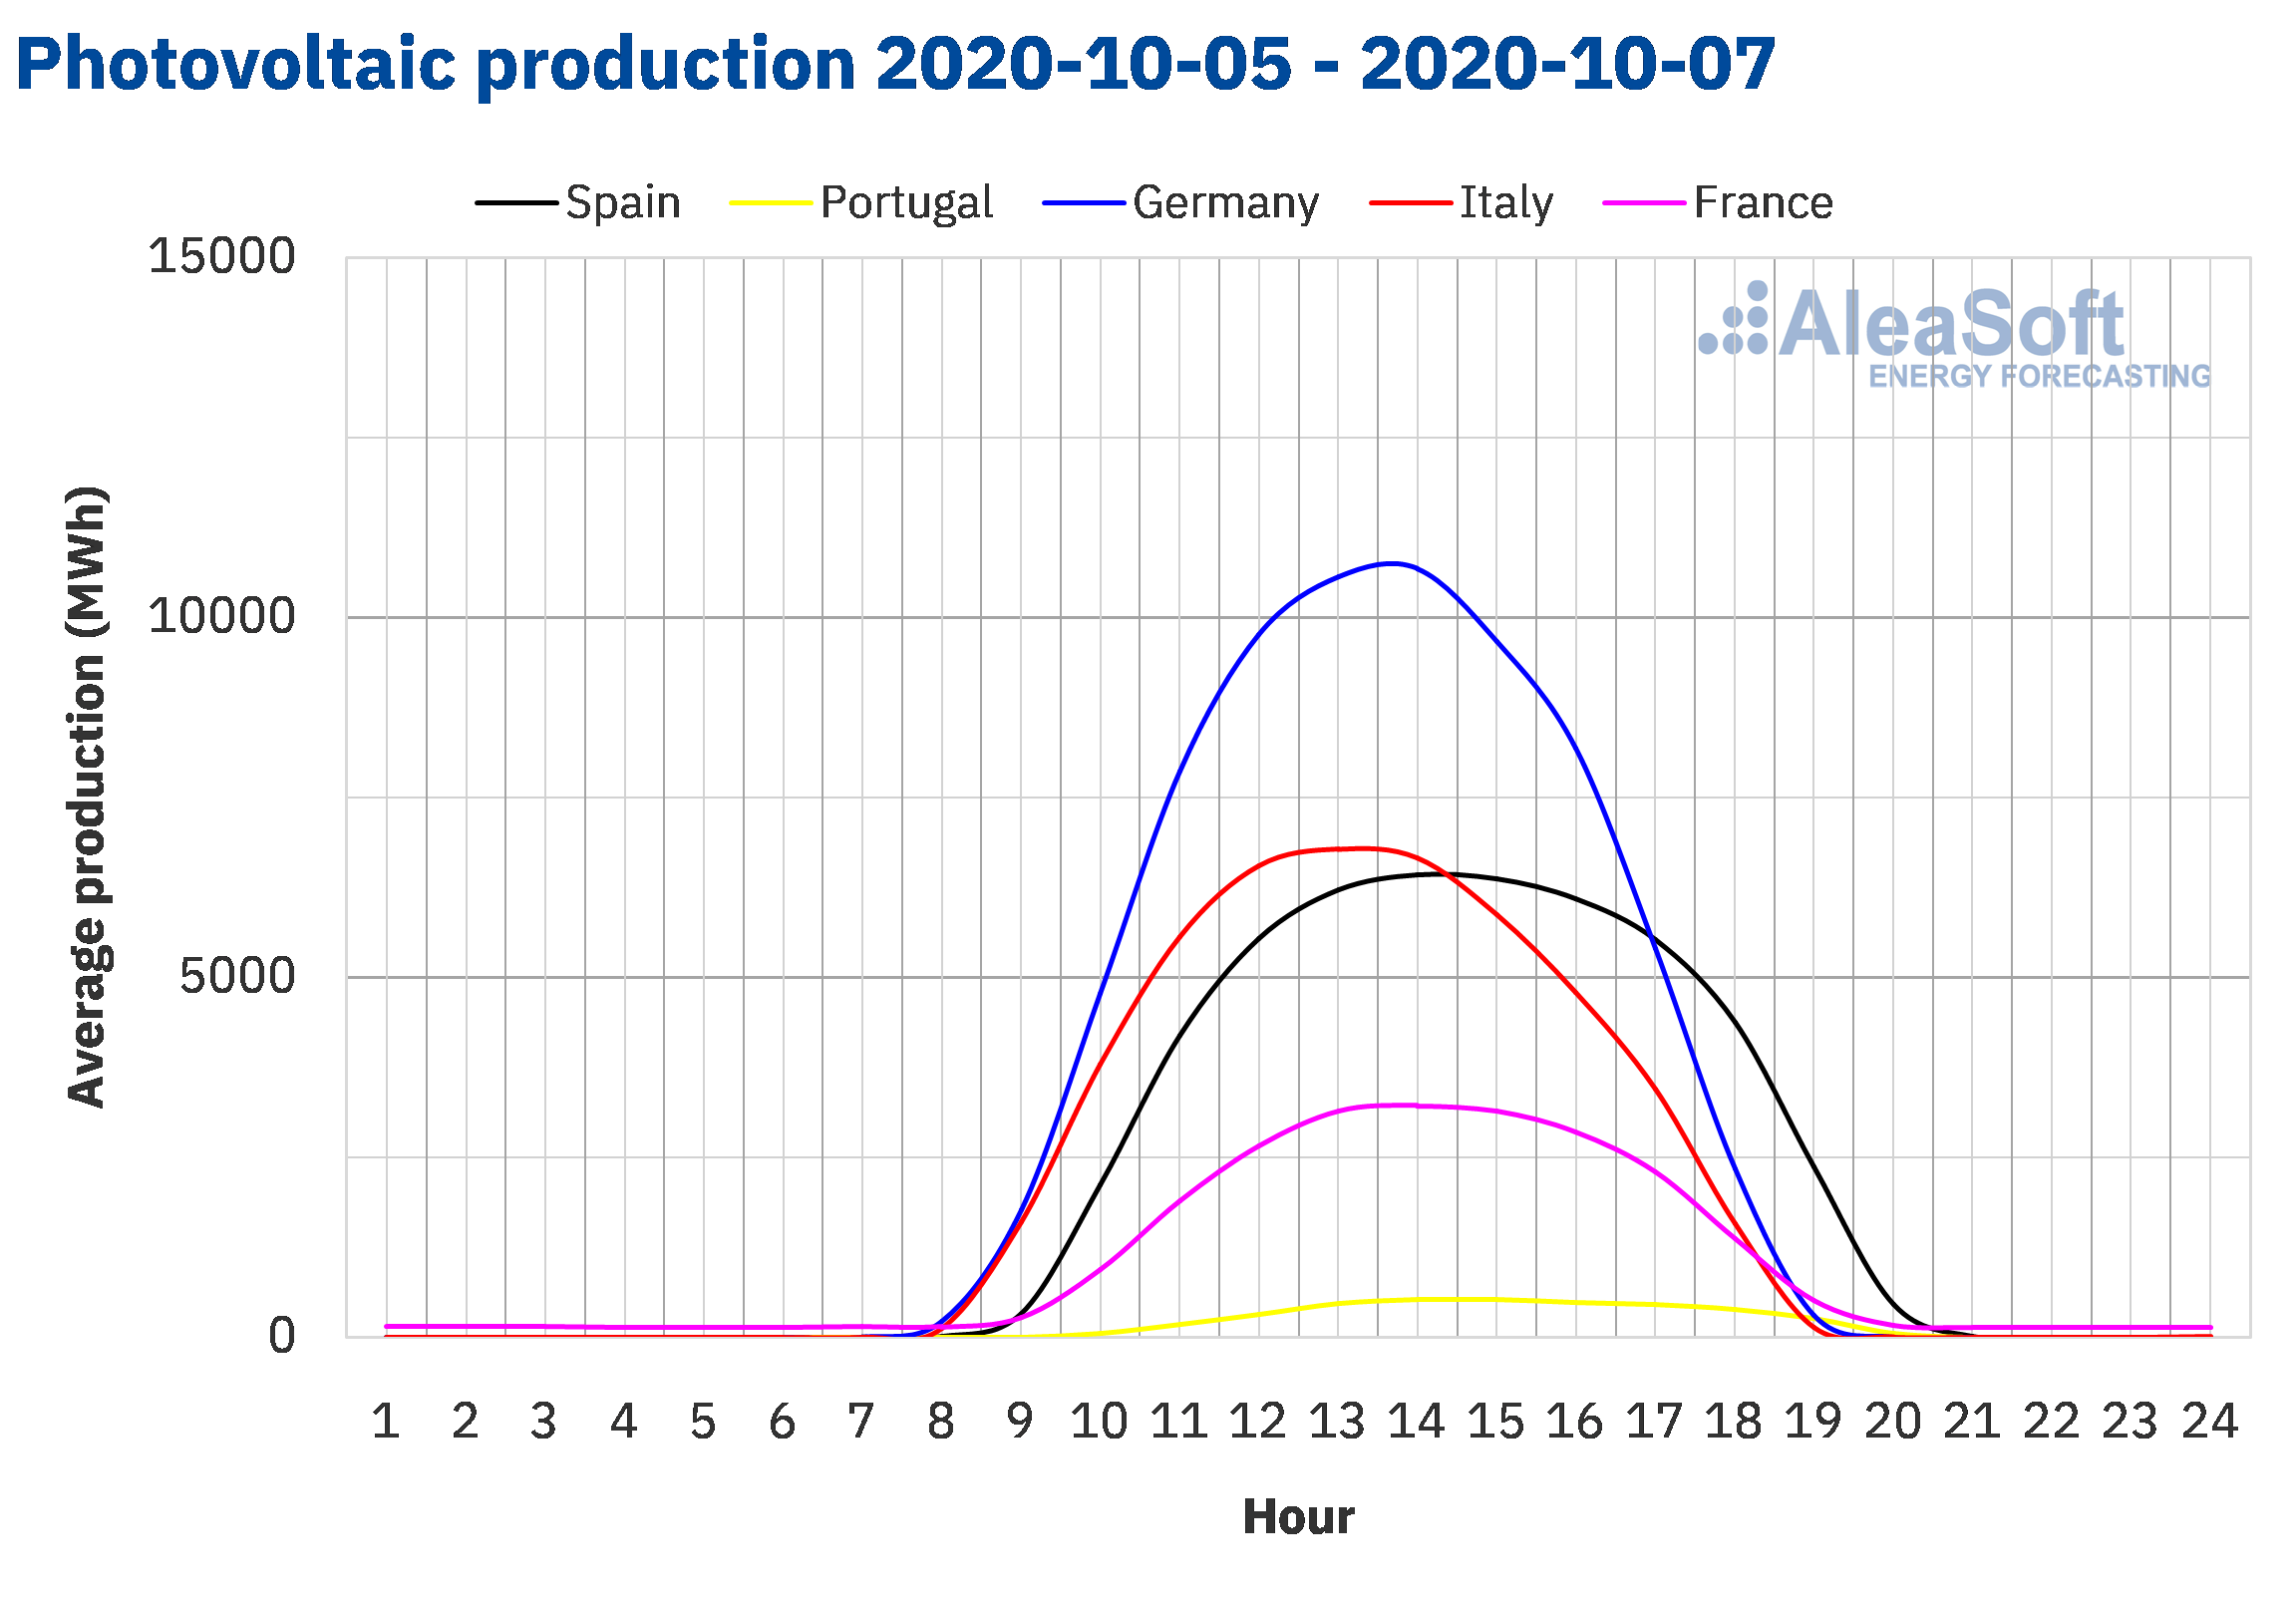 AleaSoft - Solar photovoltaic production profile Europe